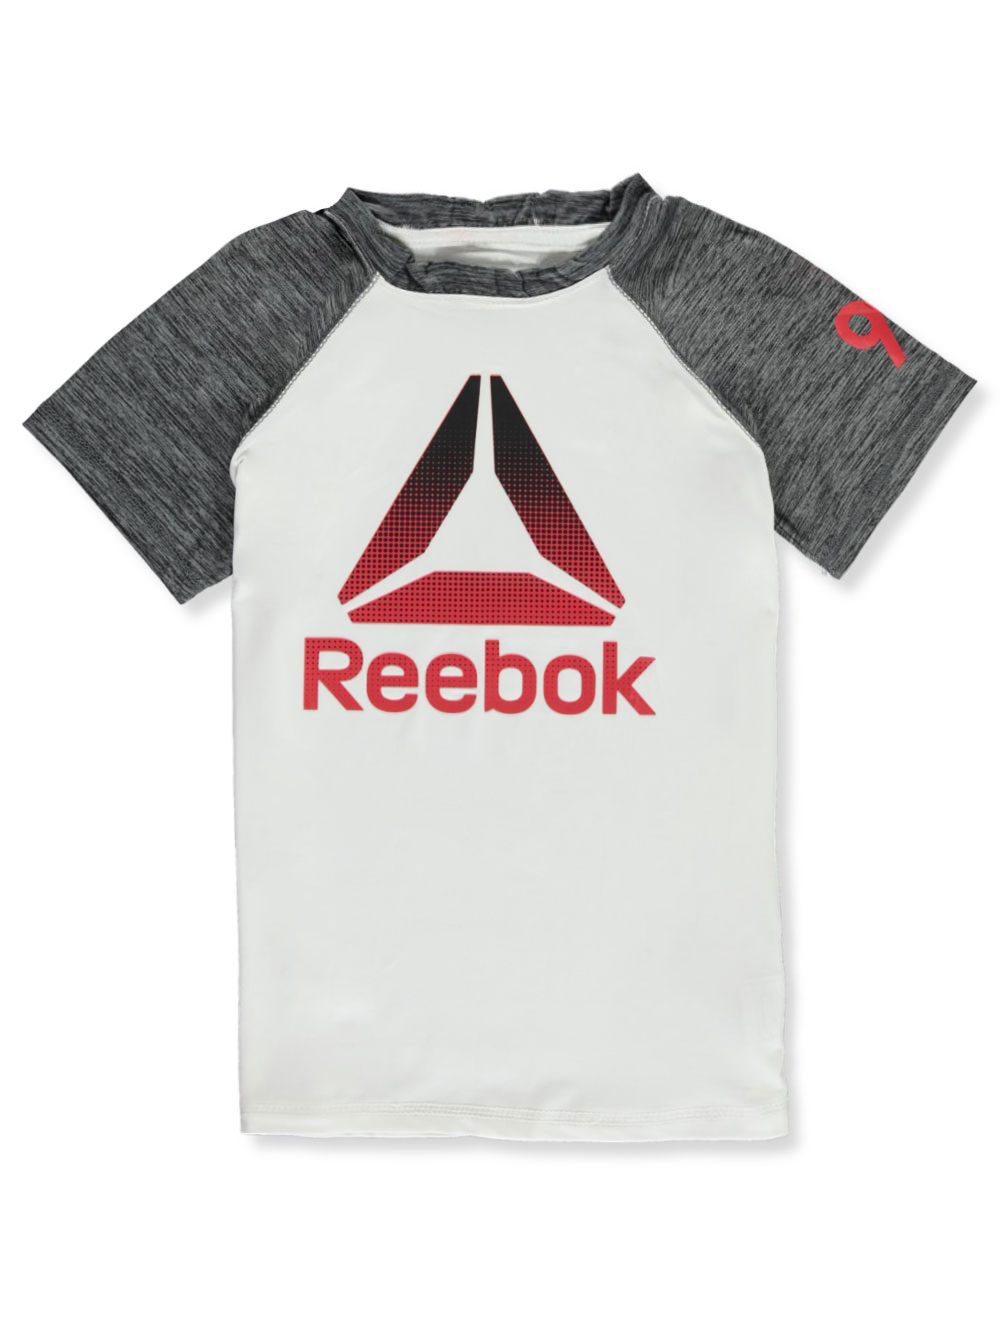 Raglan Performance T-Shirt by Reebok 